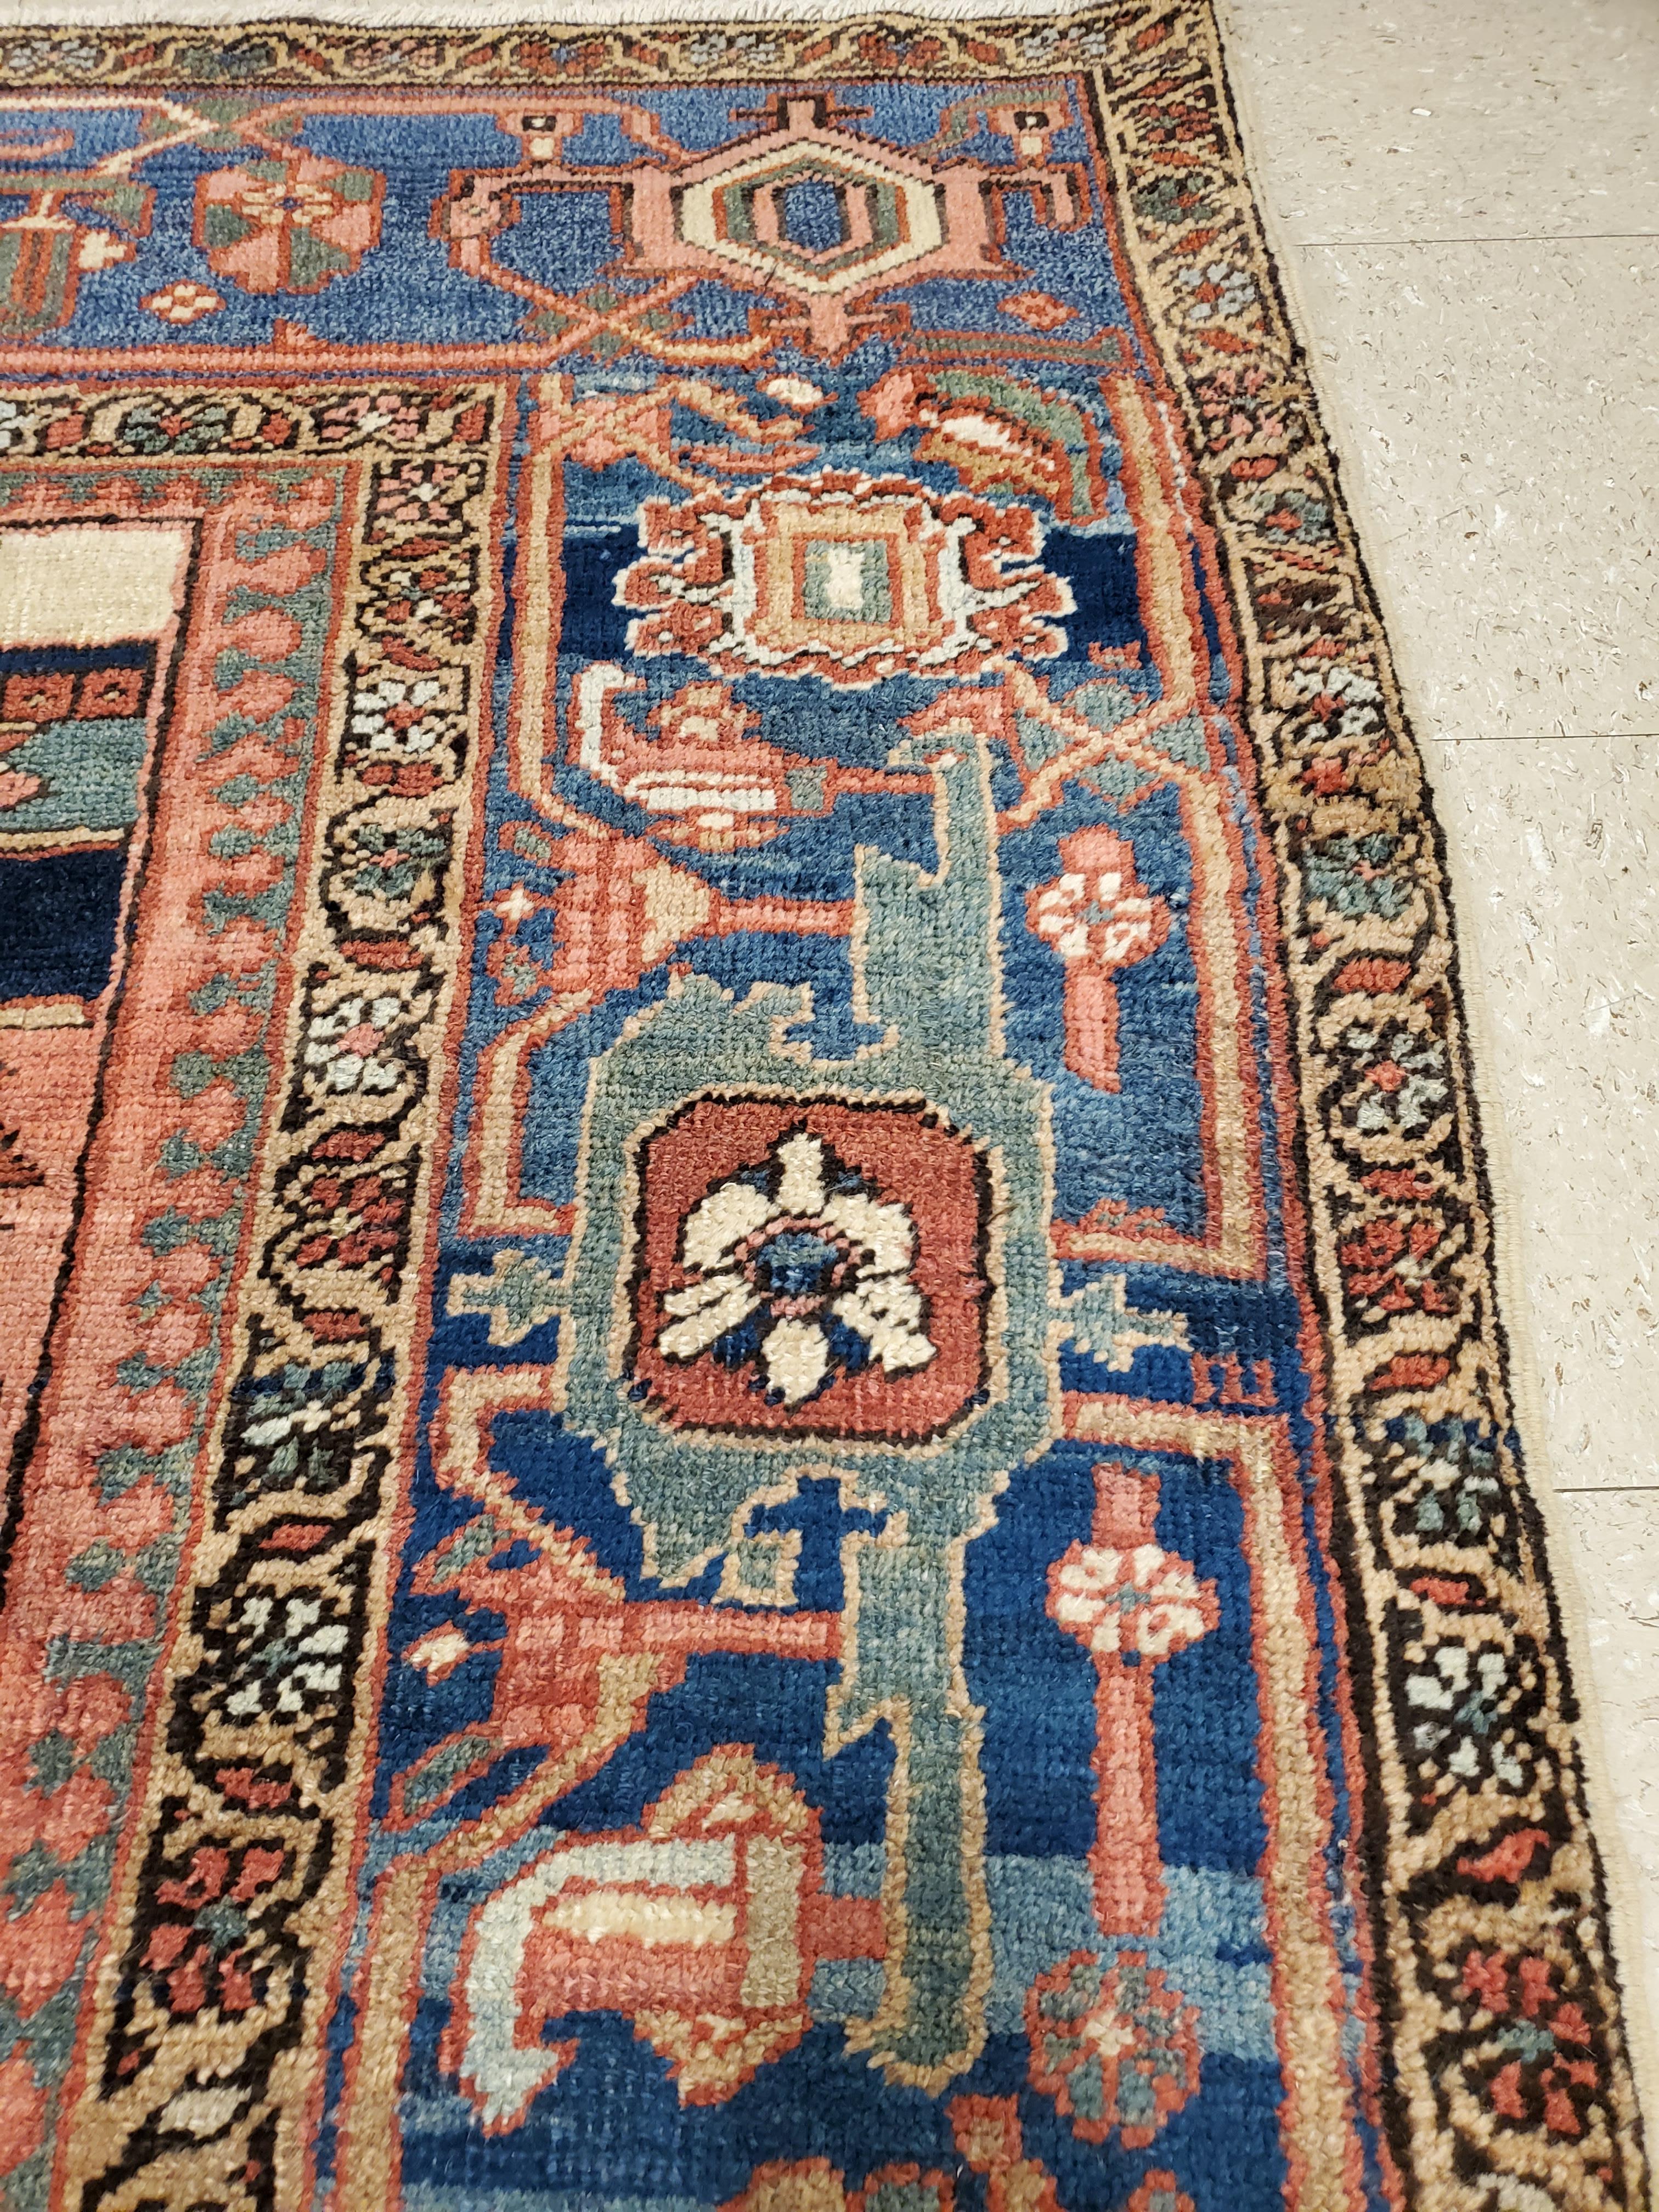 Antique Persian Heriz Carpet Handmade Wool Oriental Rug, Rust, Navy, Light Blue For Sale 1